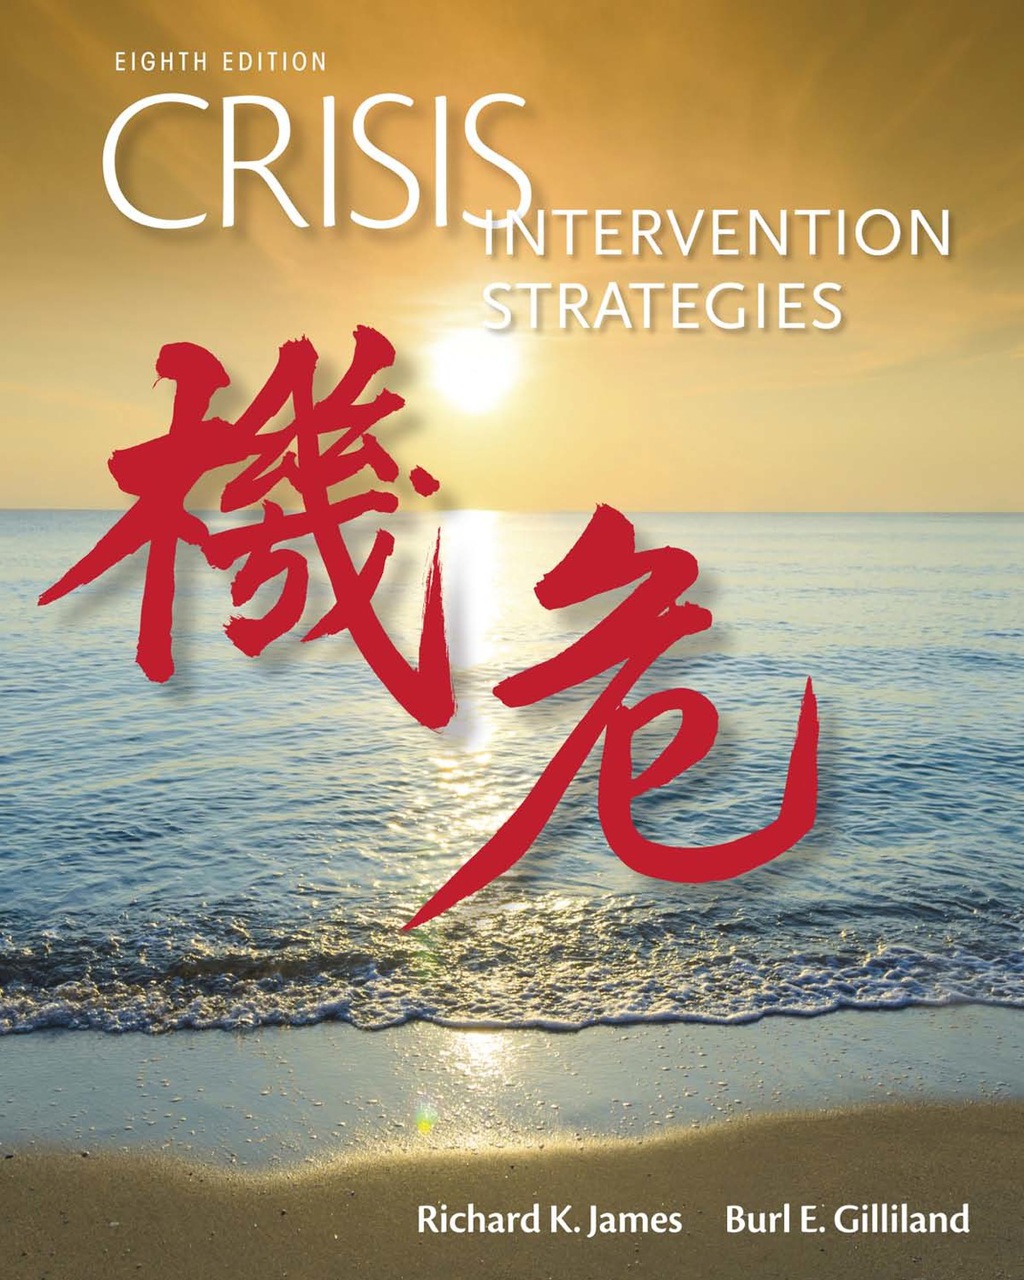 Crisis Intervention Strategies - 8th Edition (eBook)